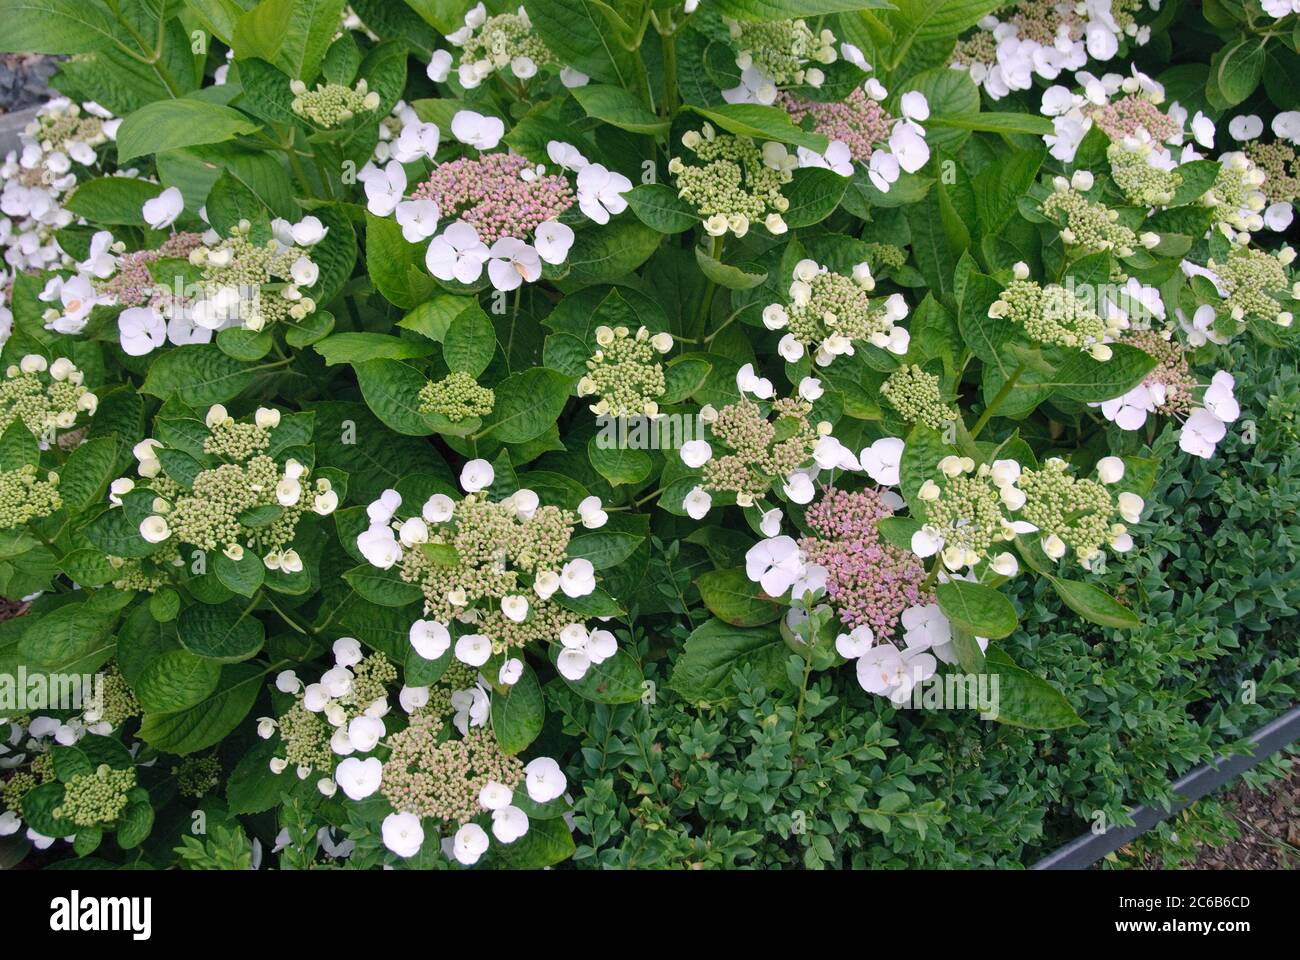 Hortensie Hydrangea, Hortensie, hortensia macrophylla Libelle Stock Photo